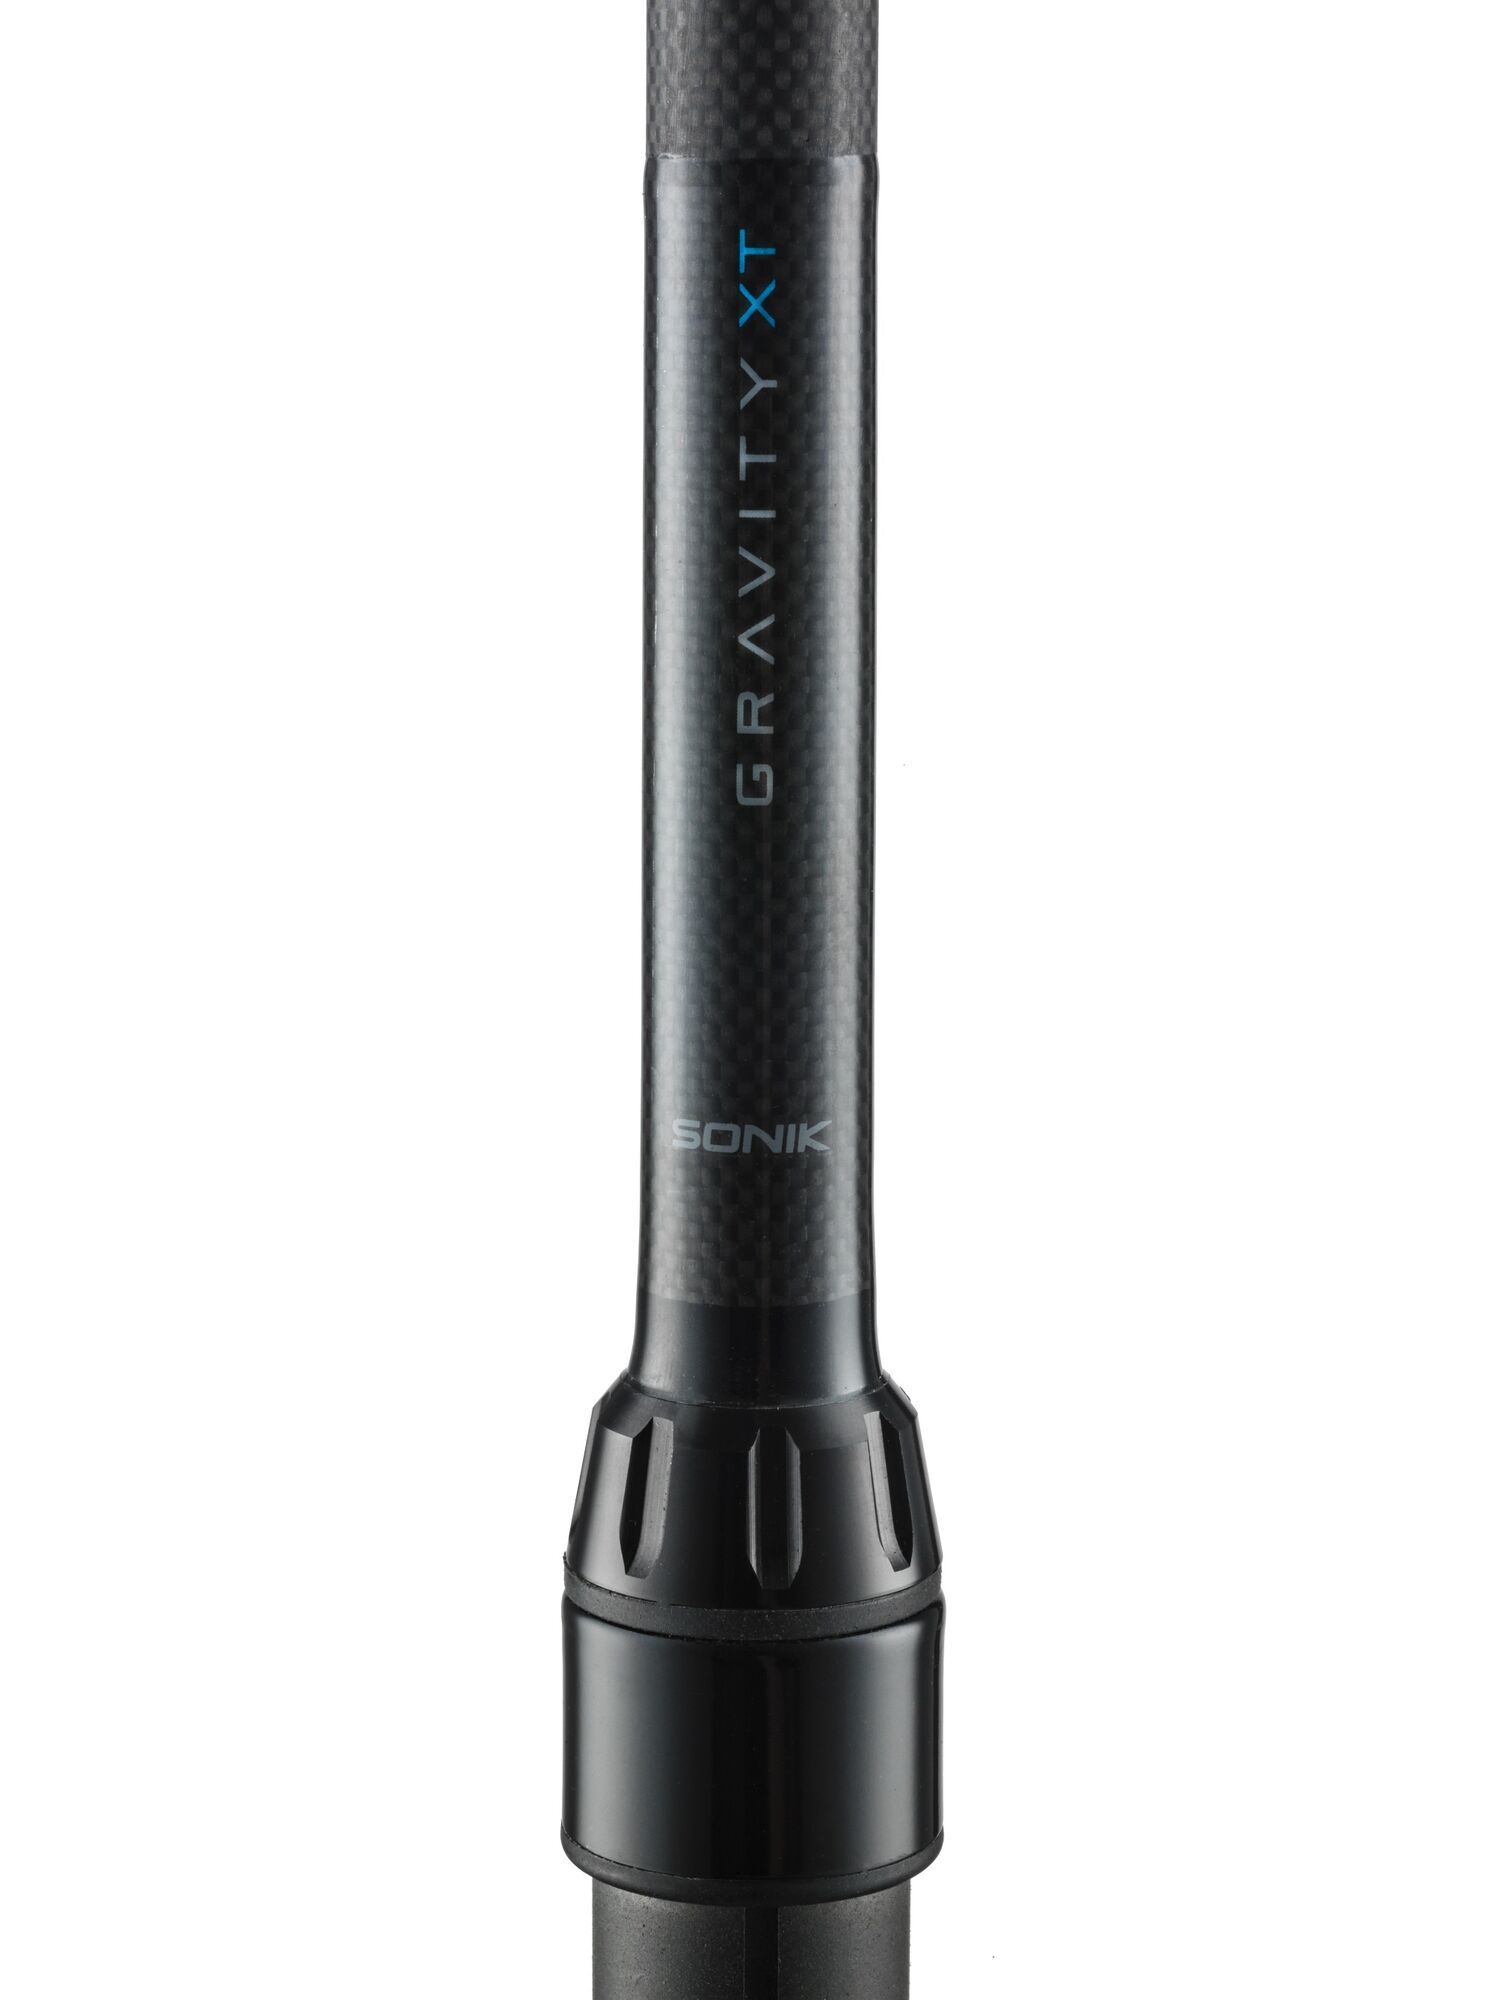 Sonik Gravity-XT 12ft S+M 5LB Spod Marker Hybrid Rod RRP £224.99 